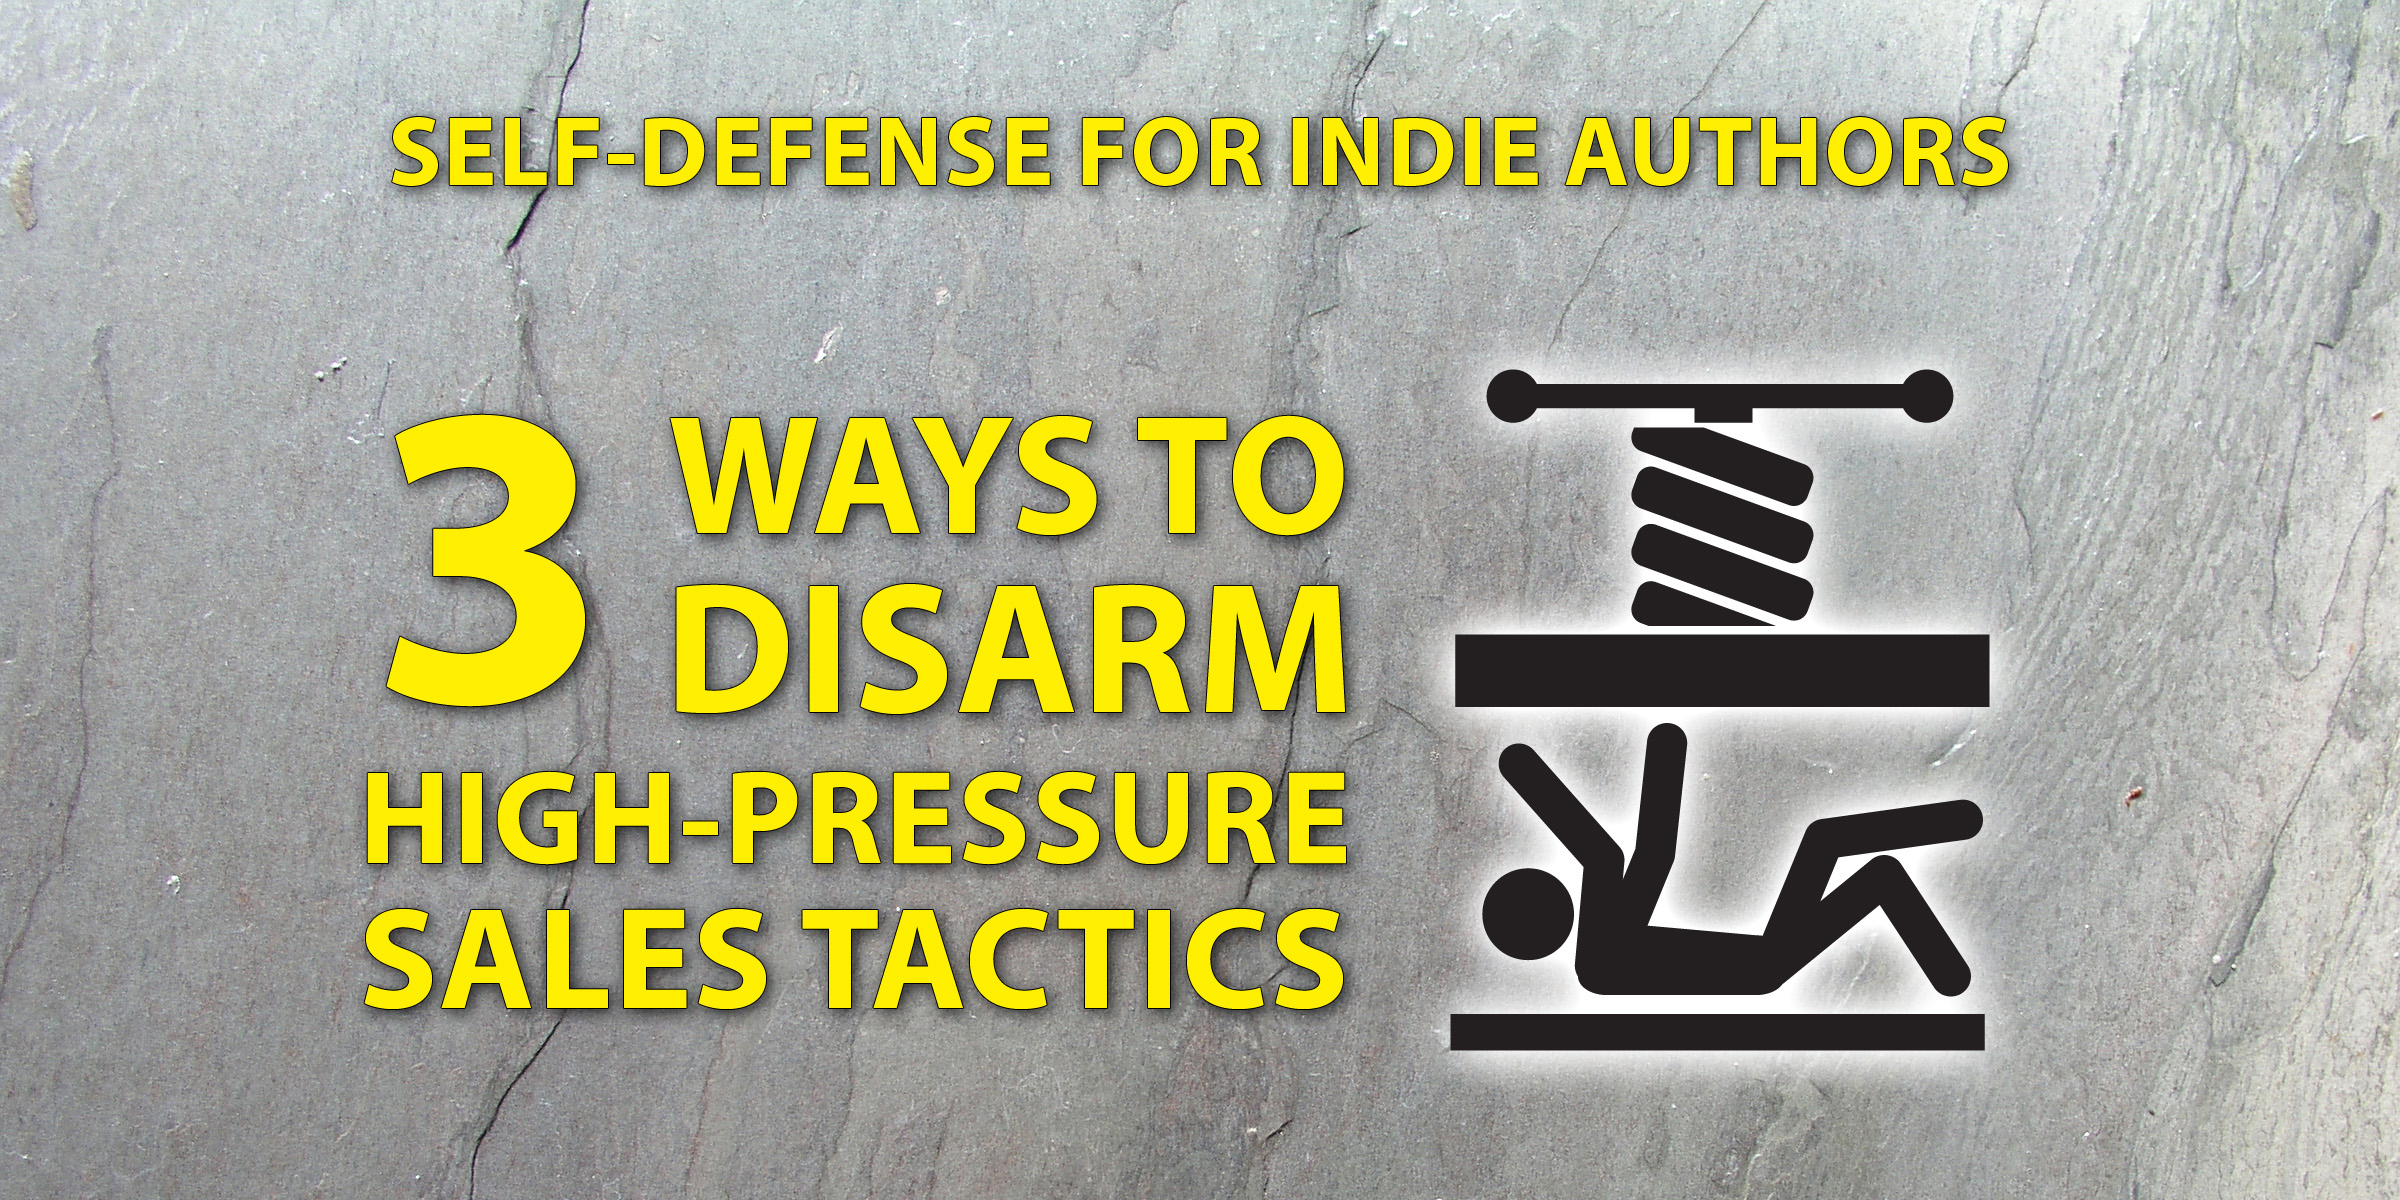 3 Ways To Disarm High-pressure Sales Tactics